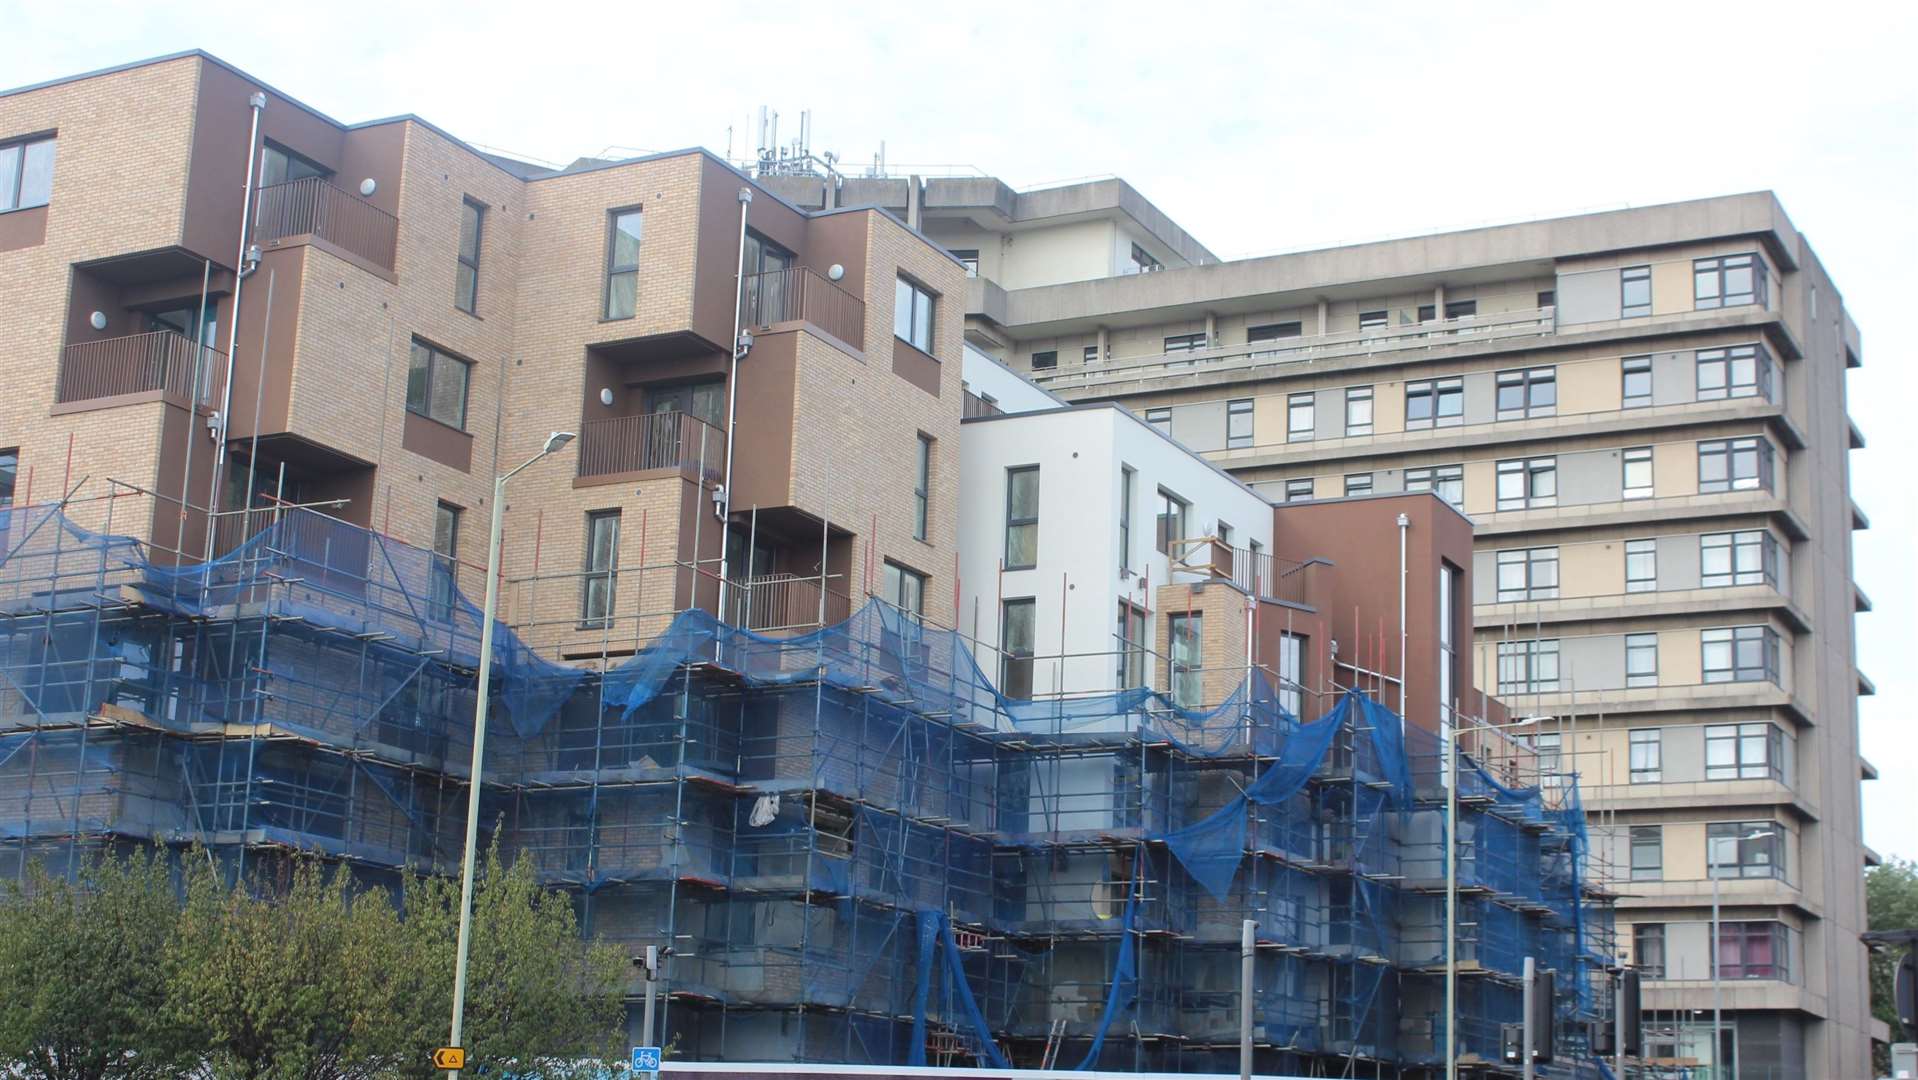 Ashford Borough Council bought the flats last year. Picture: Ashford Borough Council